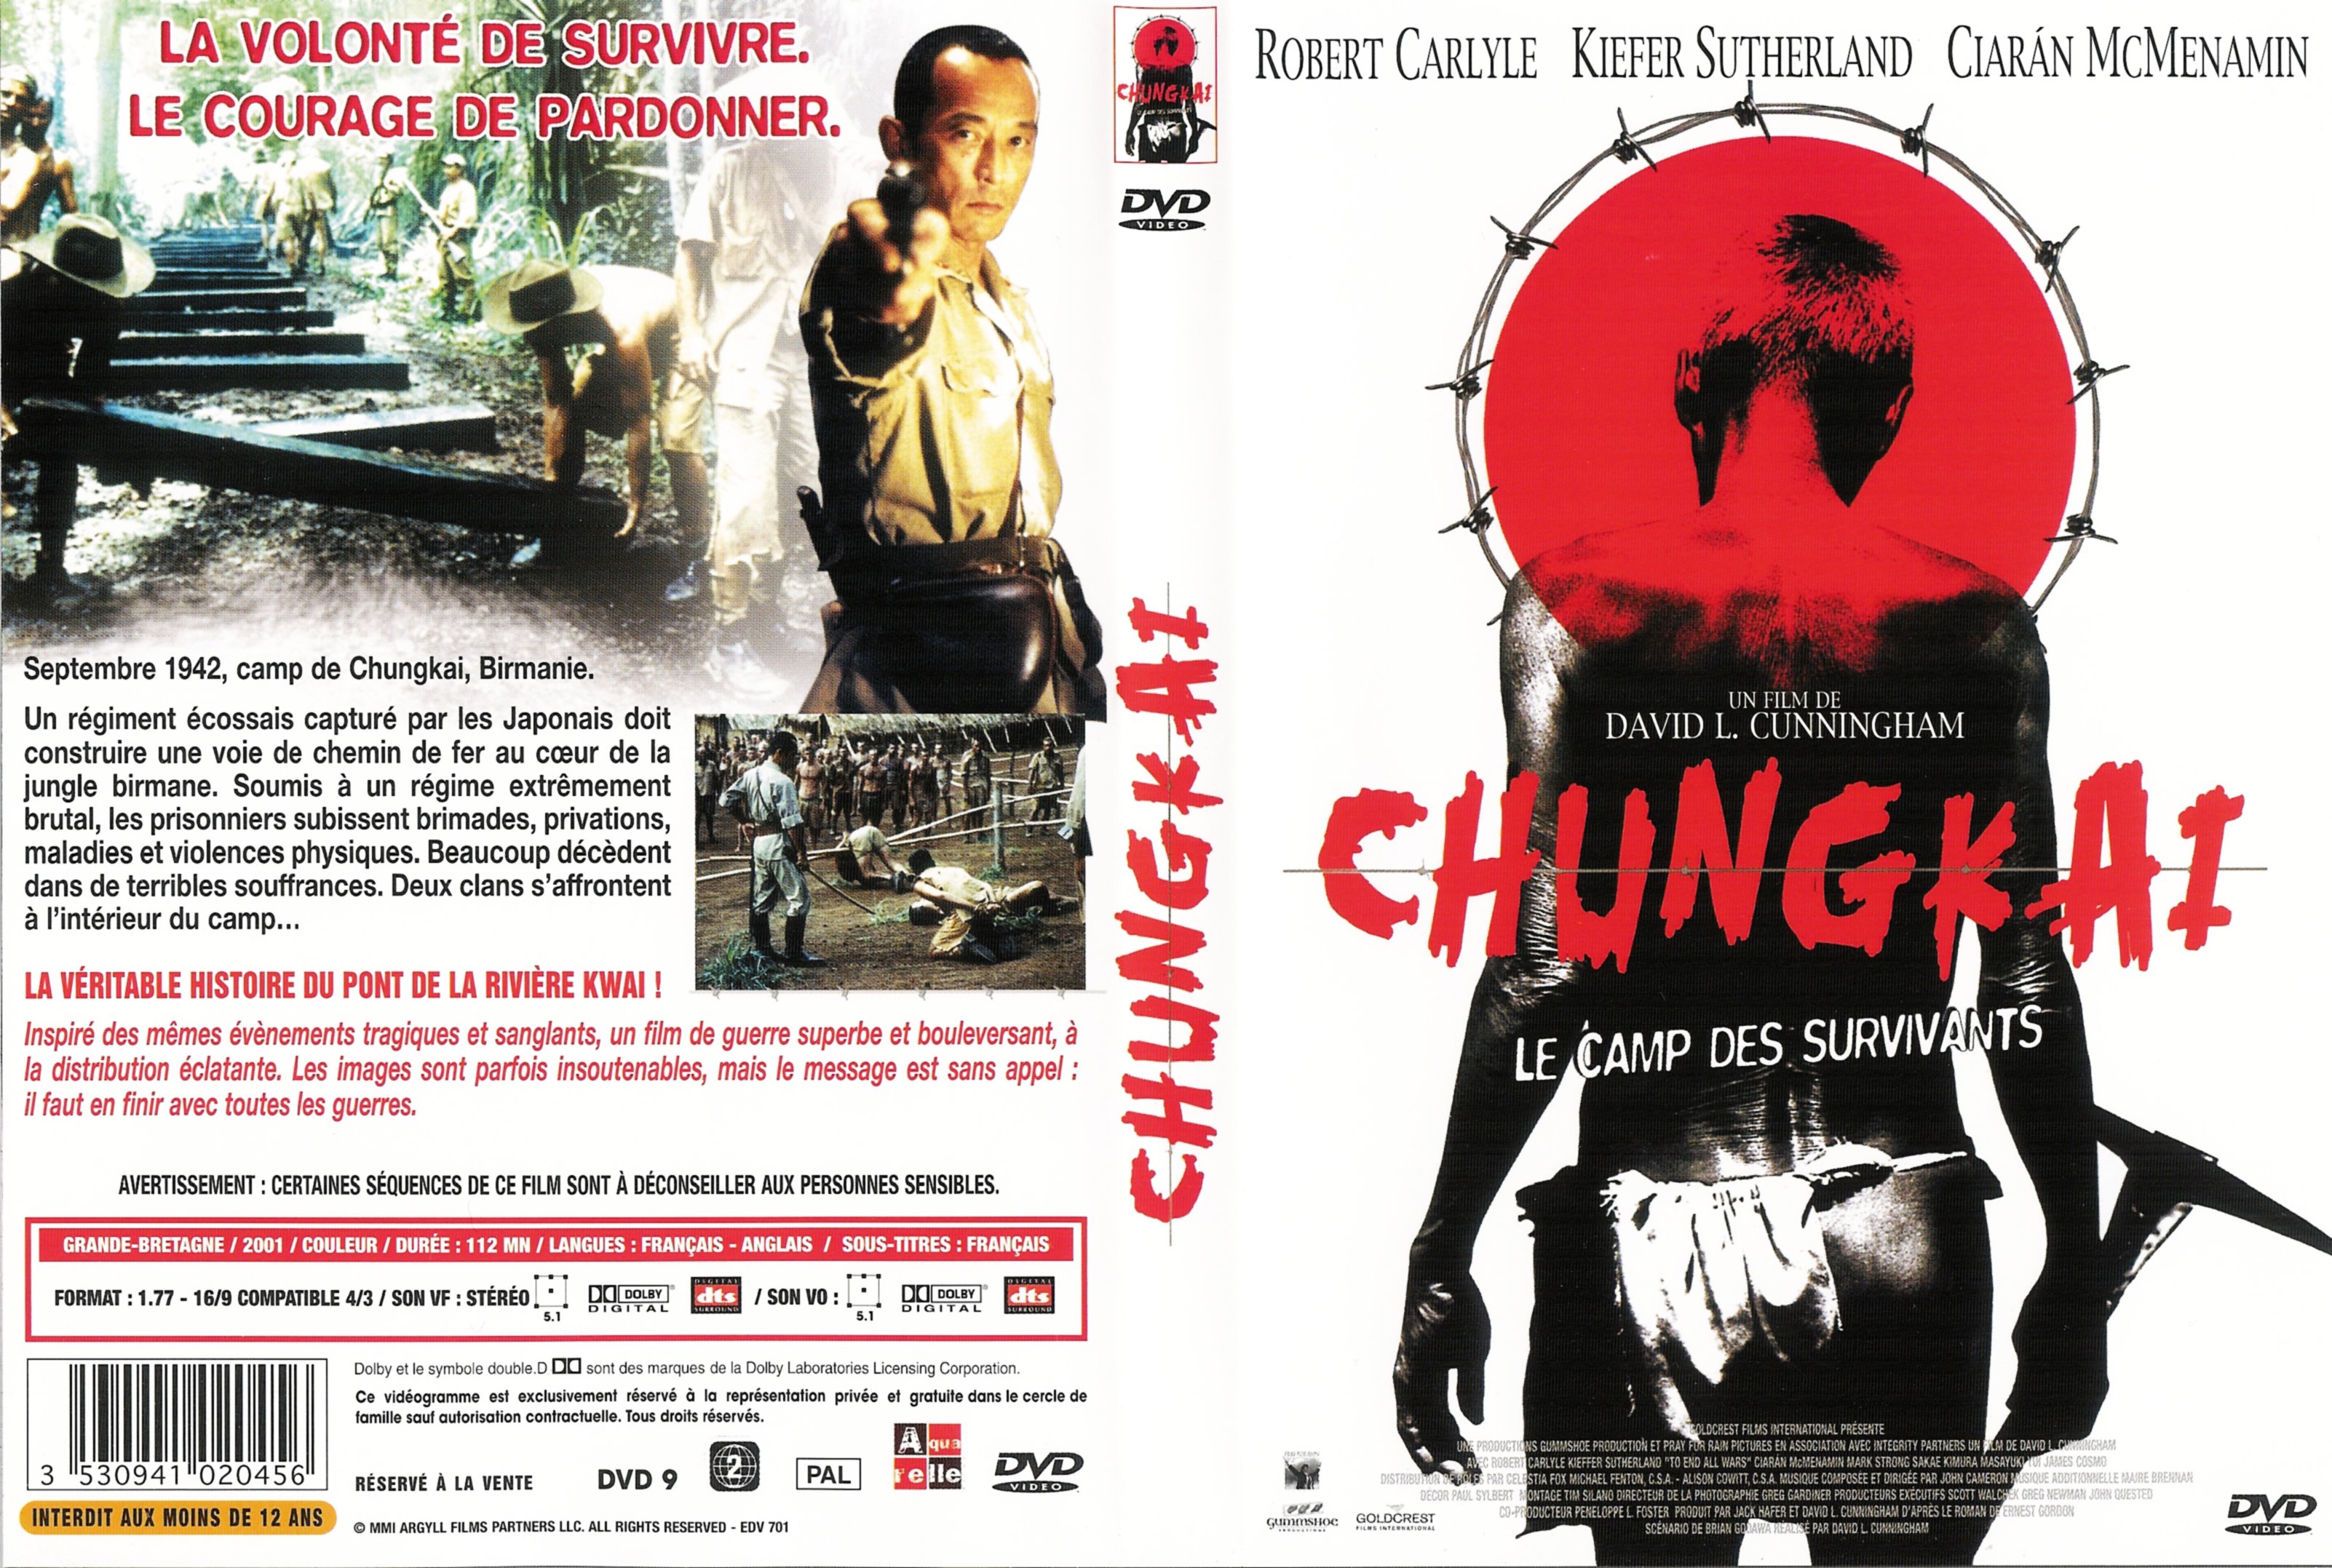 Jaquette DVD Chungkai v2